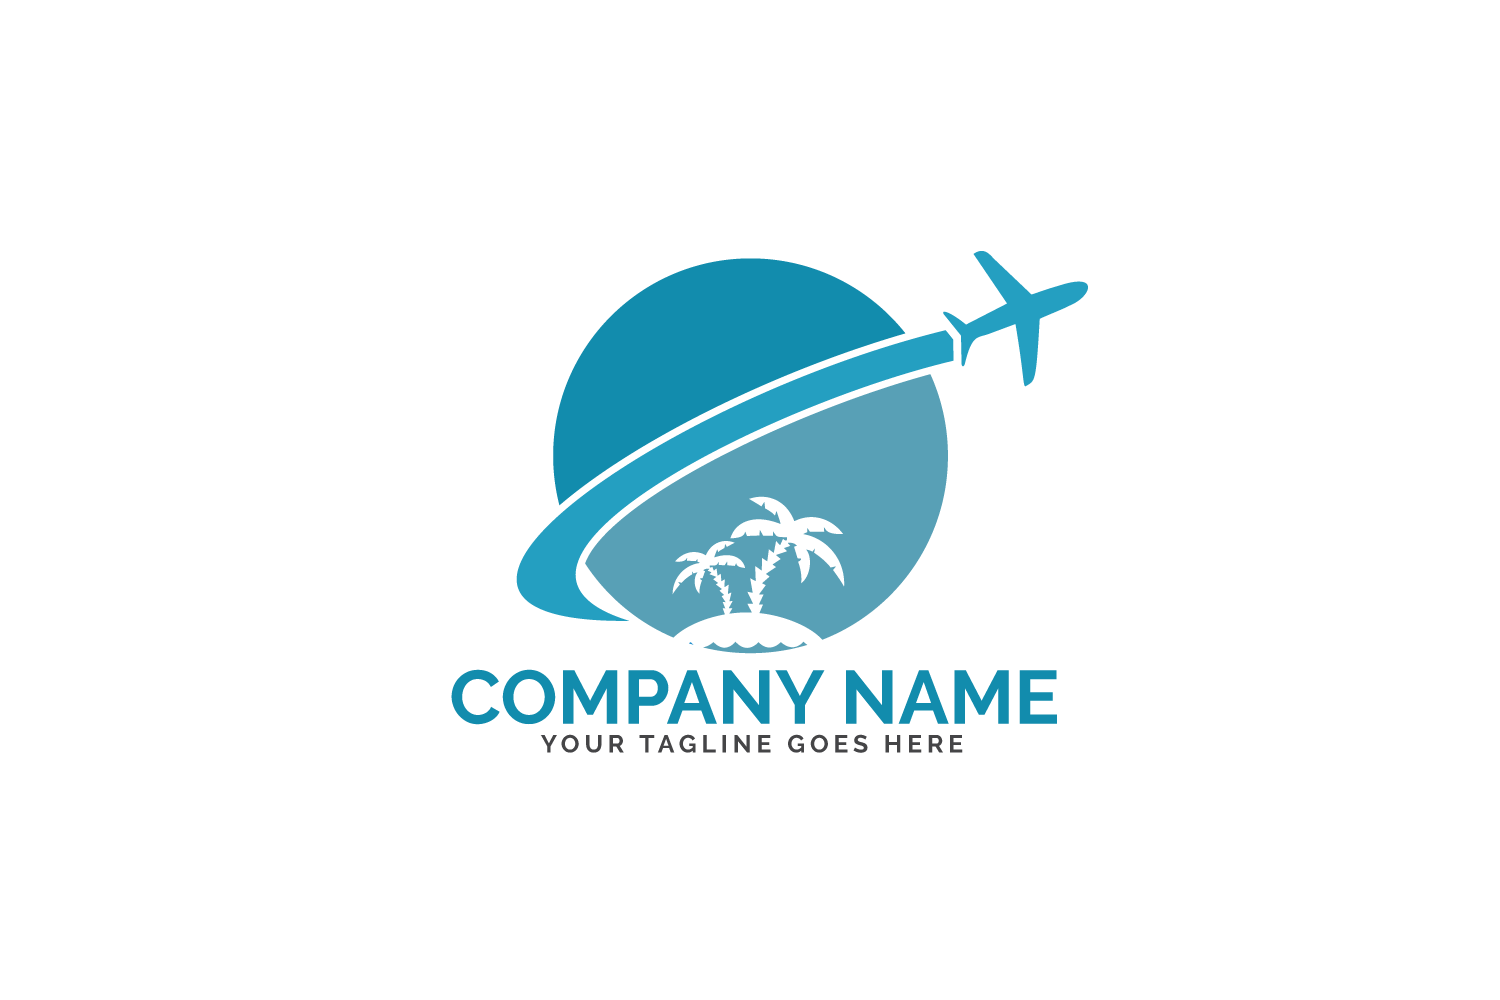 creative travel logo design